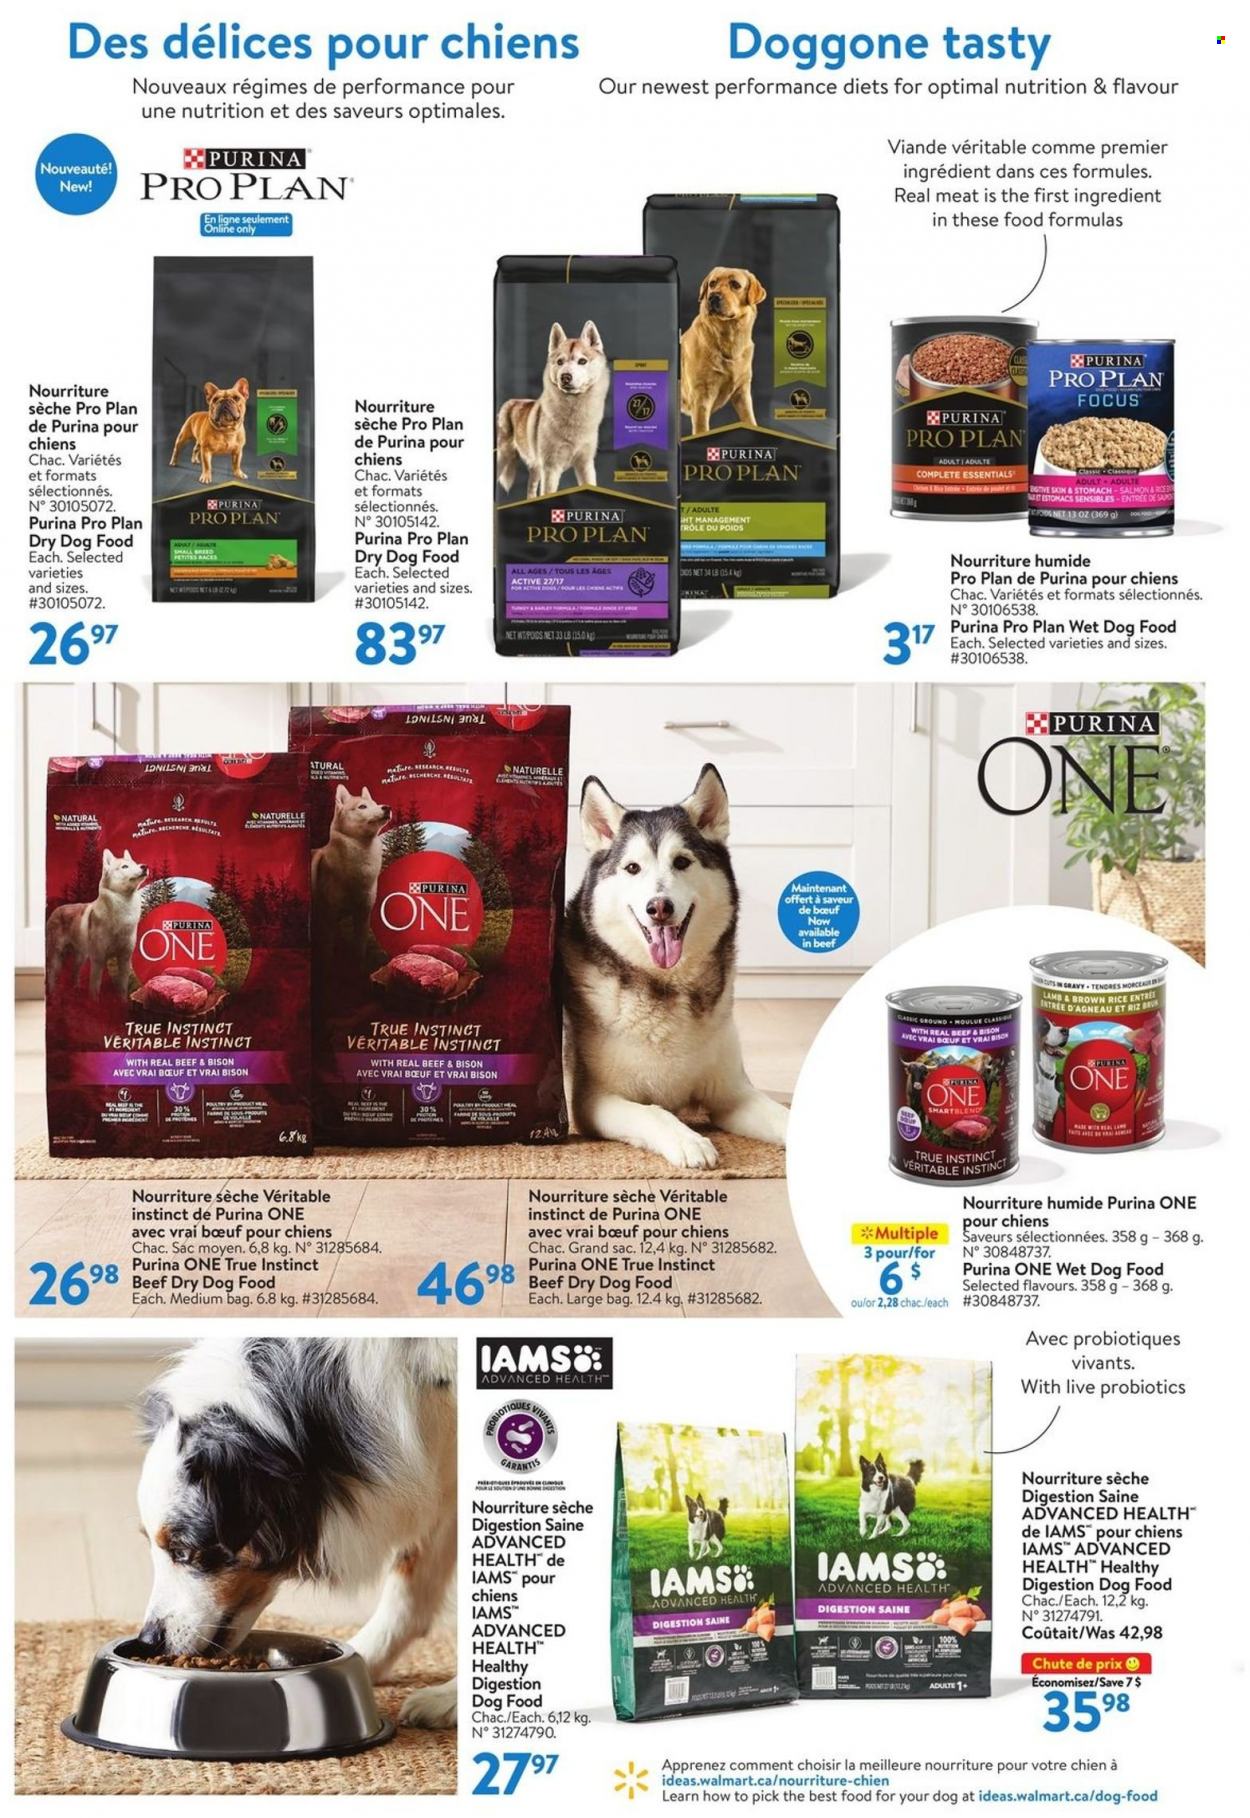 thumbnail - Walmart Flyer - April 21, 2022 - May 18, 2022 - Sales products - brown rice, rice, animal food, dog food, wet dog food, PRO PLAN, Purina, dry dog food, Iams, Malm, probiotics. Page 3.